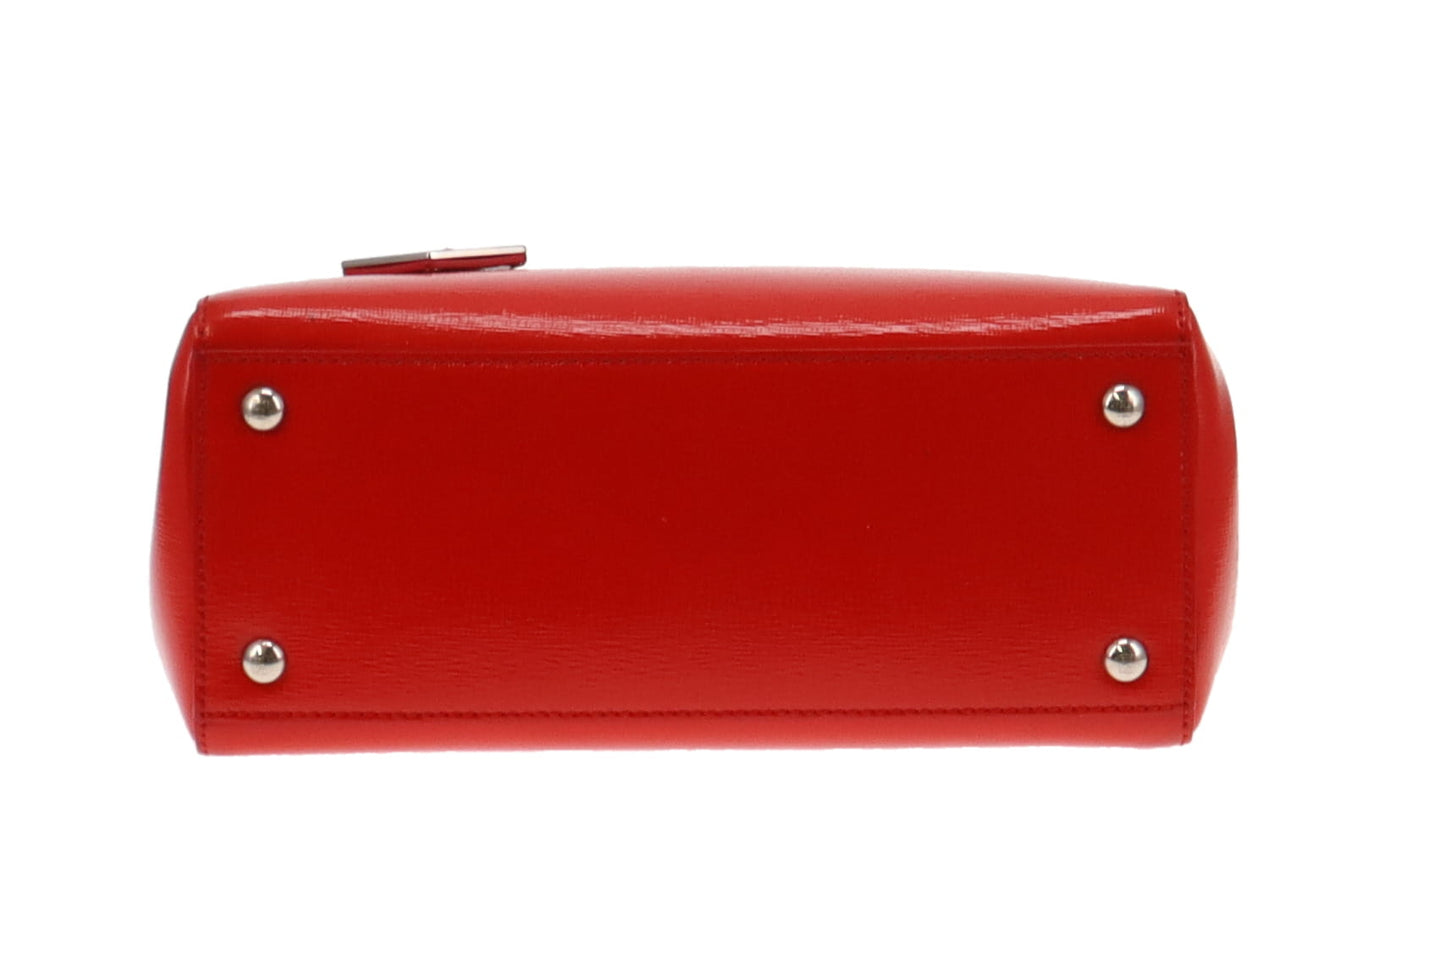 Fendi Red Patent Leather Petite 2Jour